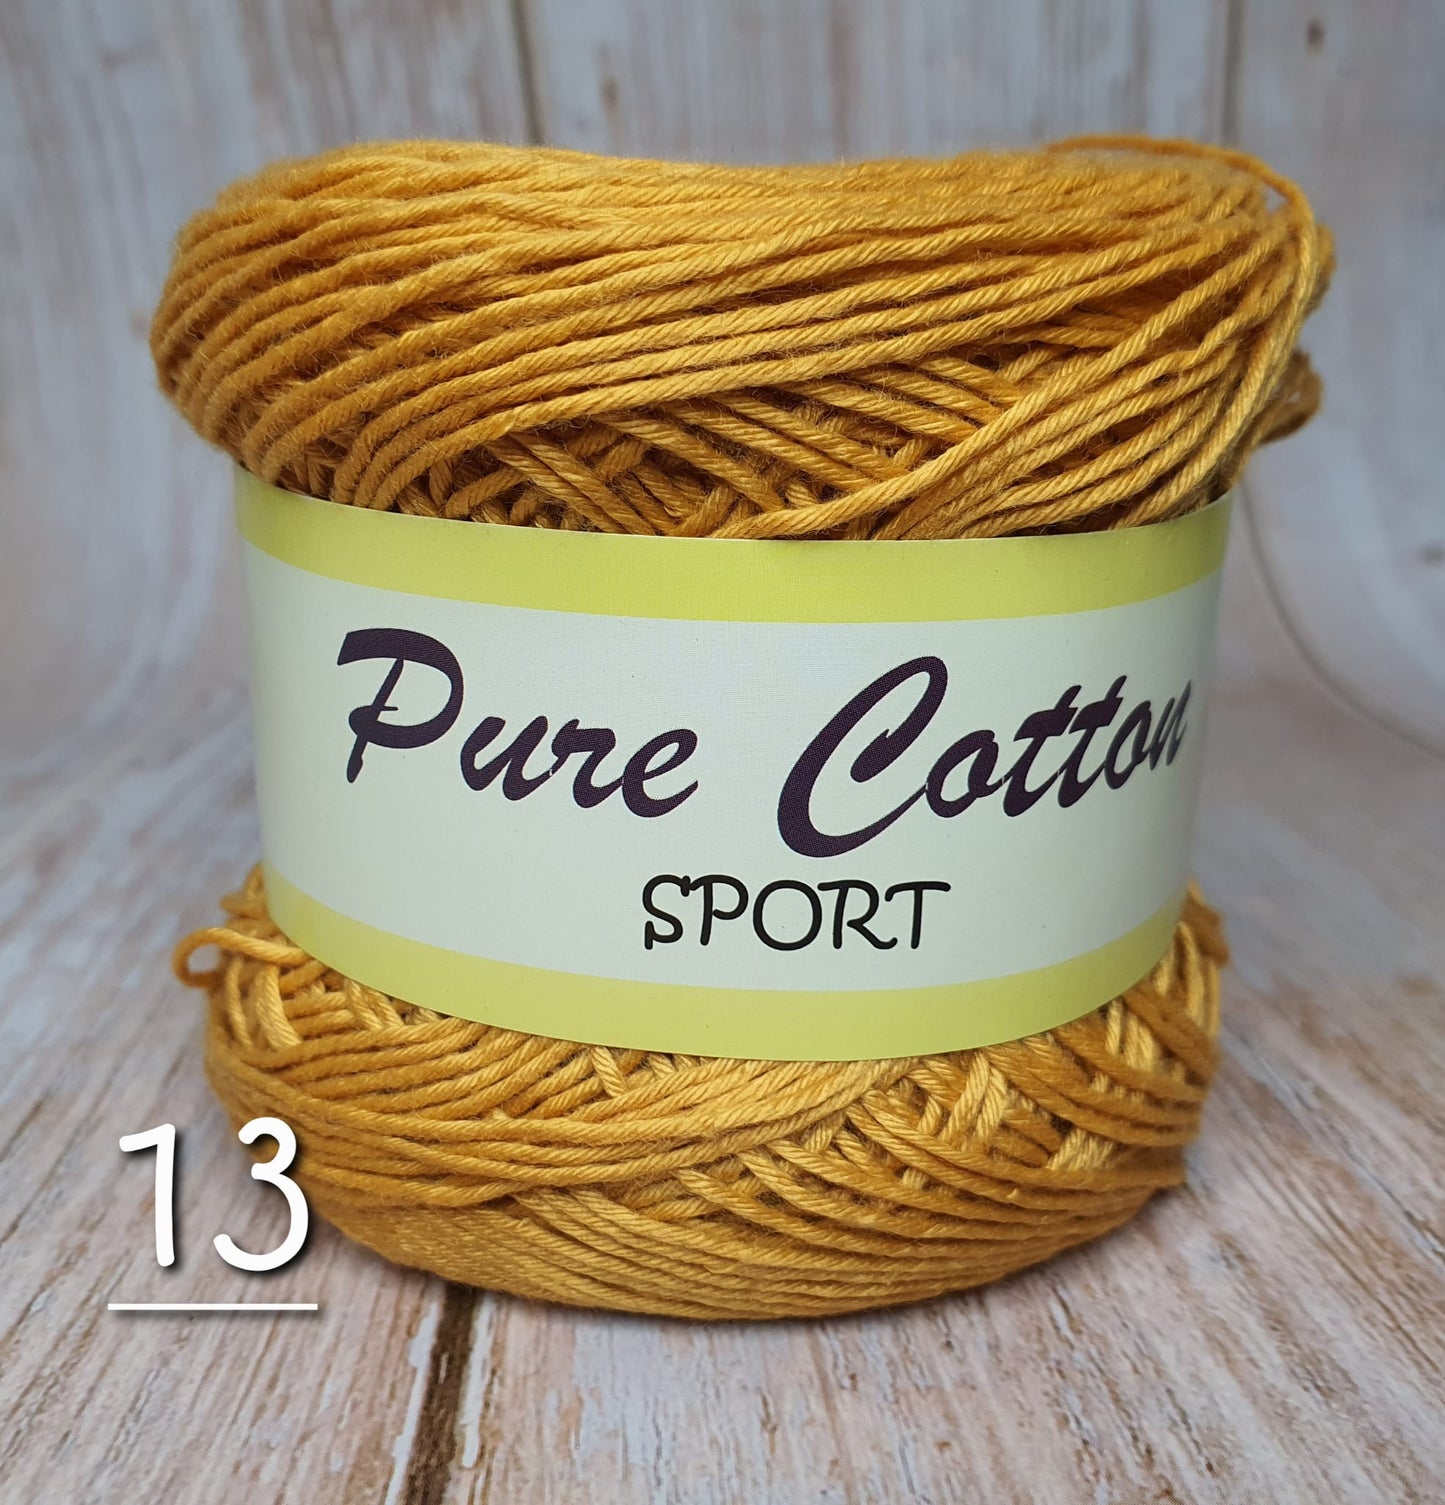 Pure Cotton Yarn 4ply 100g